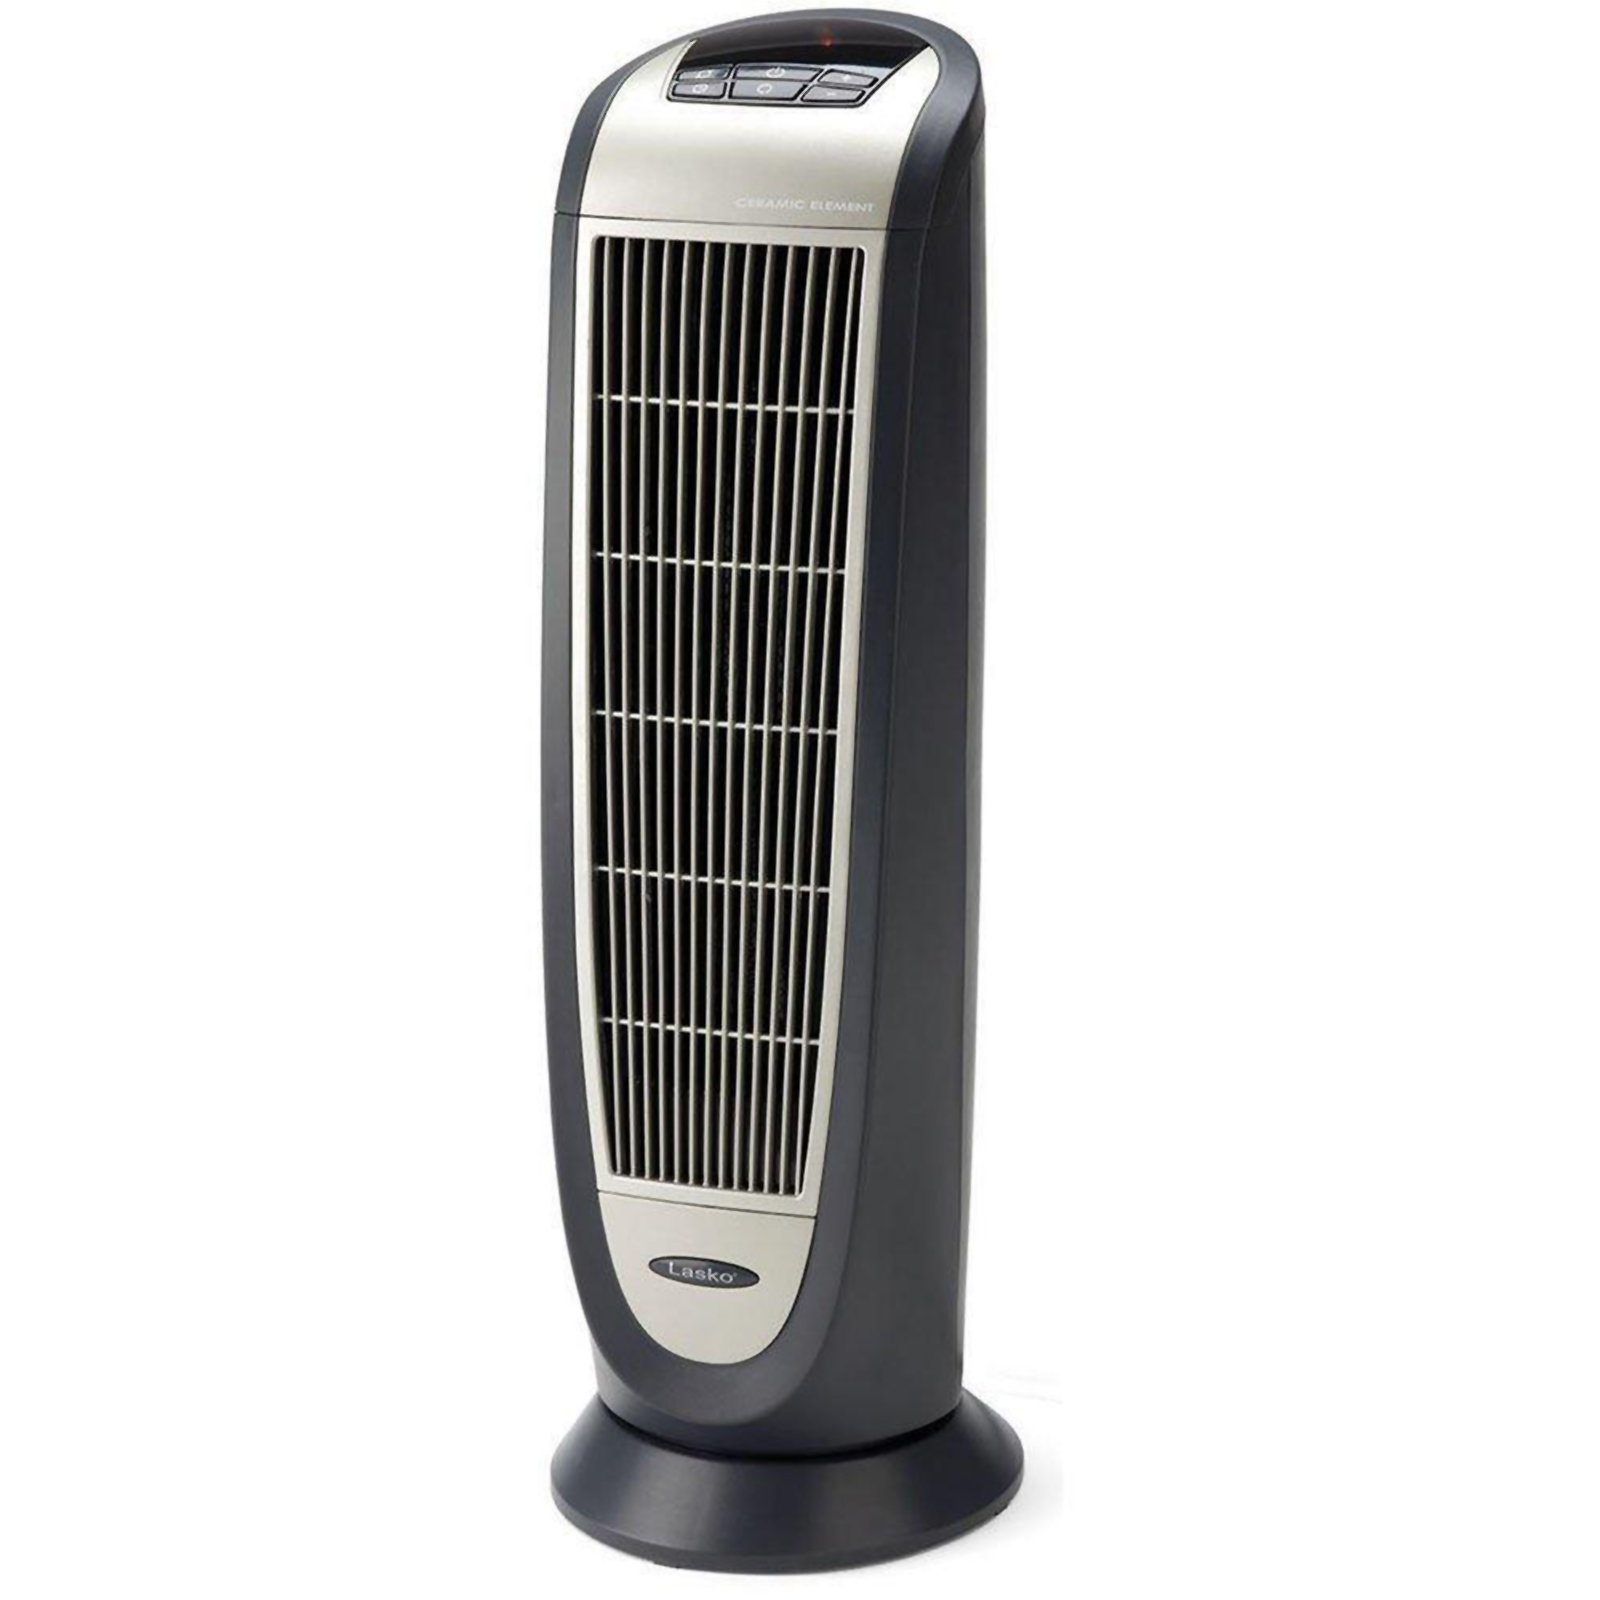 Lasko Products 5160  23" Digital Ceramic Tower Heater with Remote Control - Dark Gray